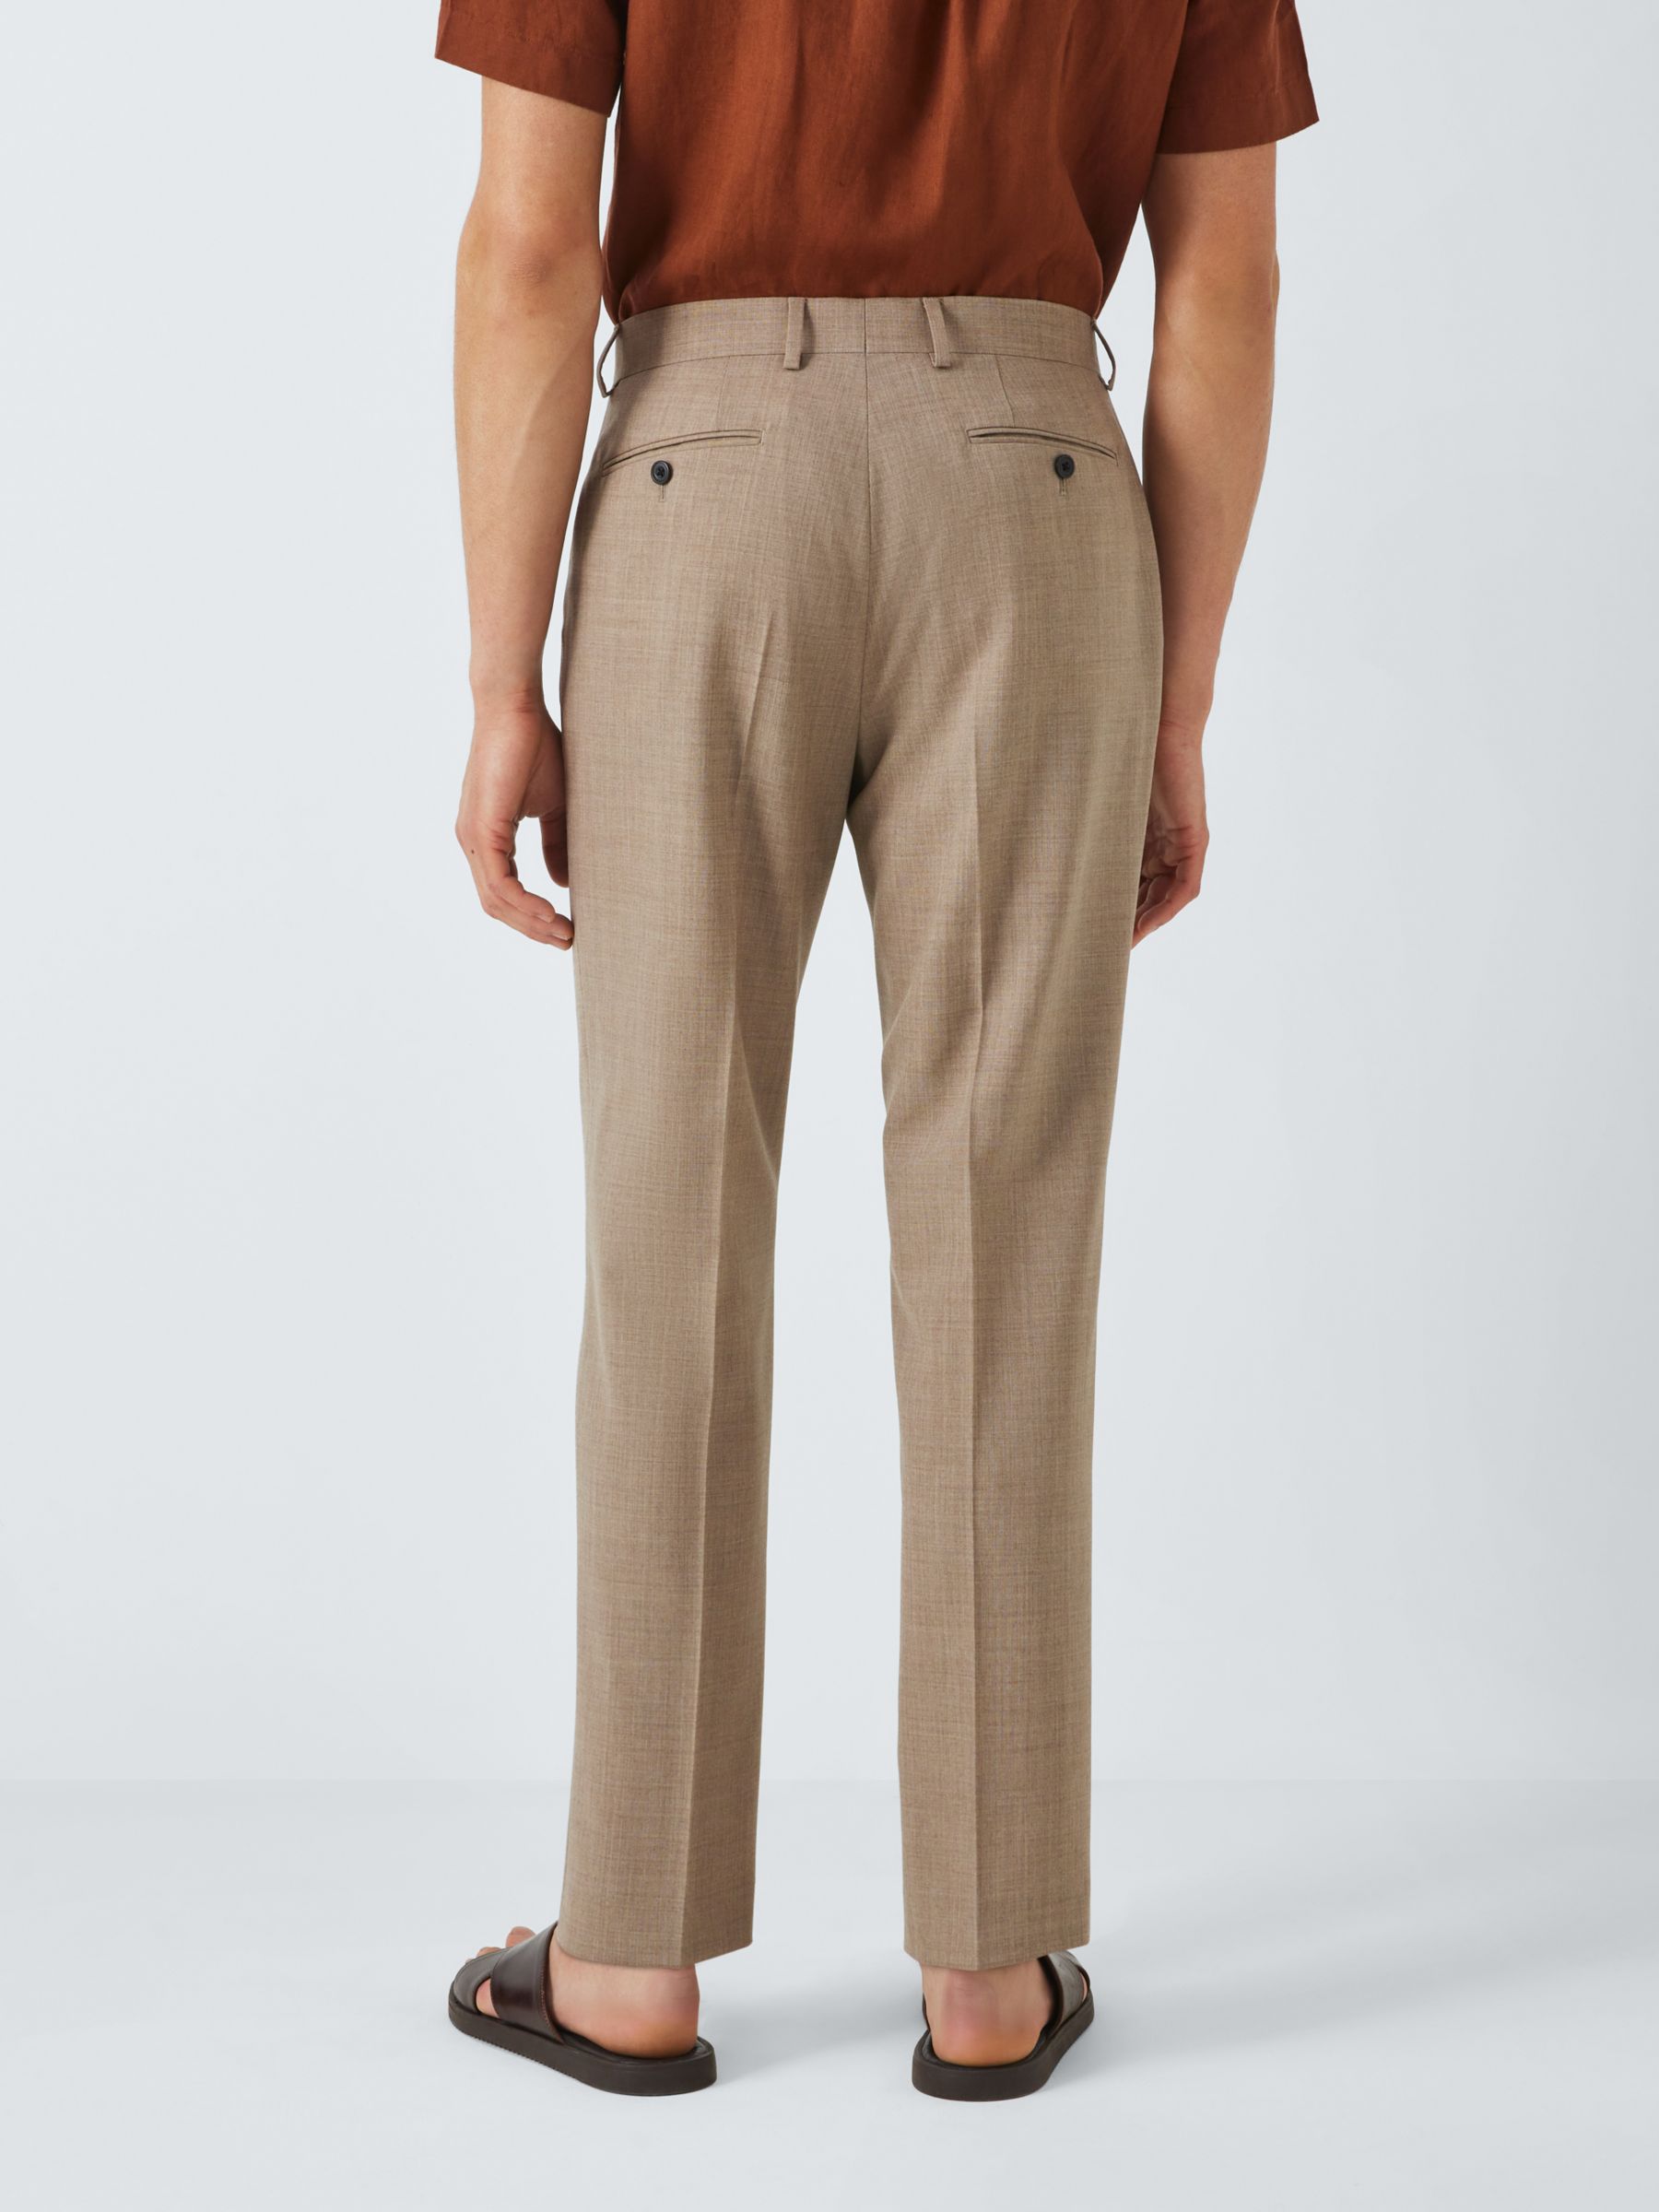 John Lewis Stowe Regular Fit Trousers, Sand, 38R